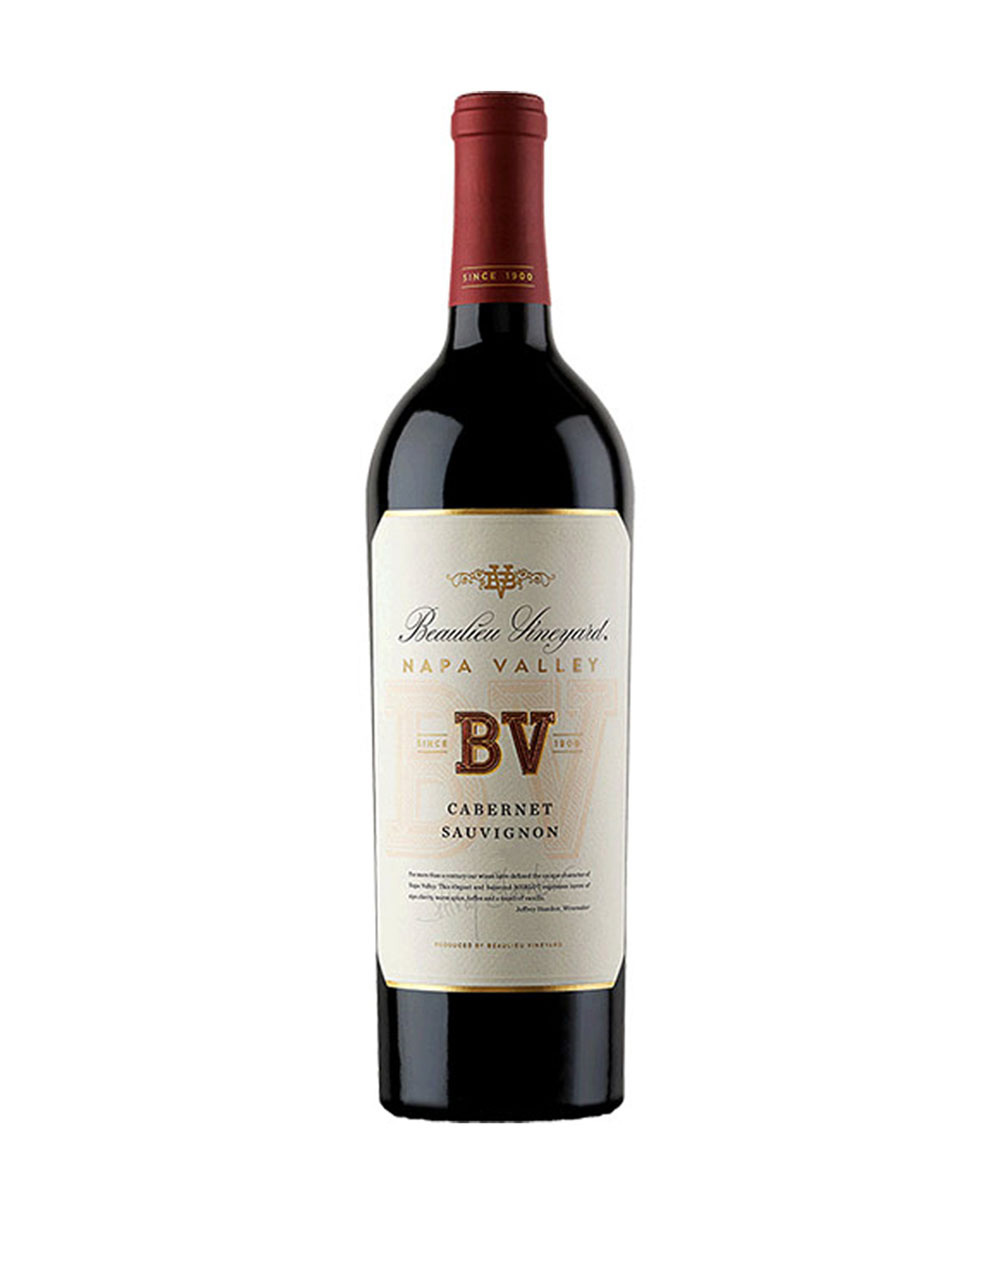 Beaulieu Vineyard (BV) Cabernet Sauvignon 2015 Napa Valley